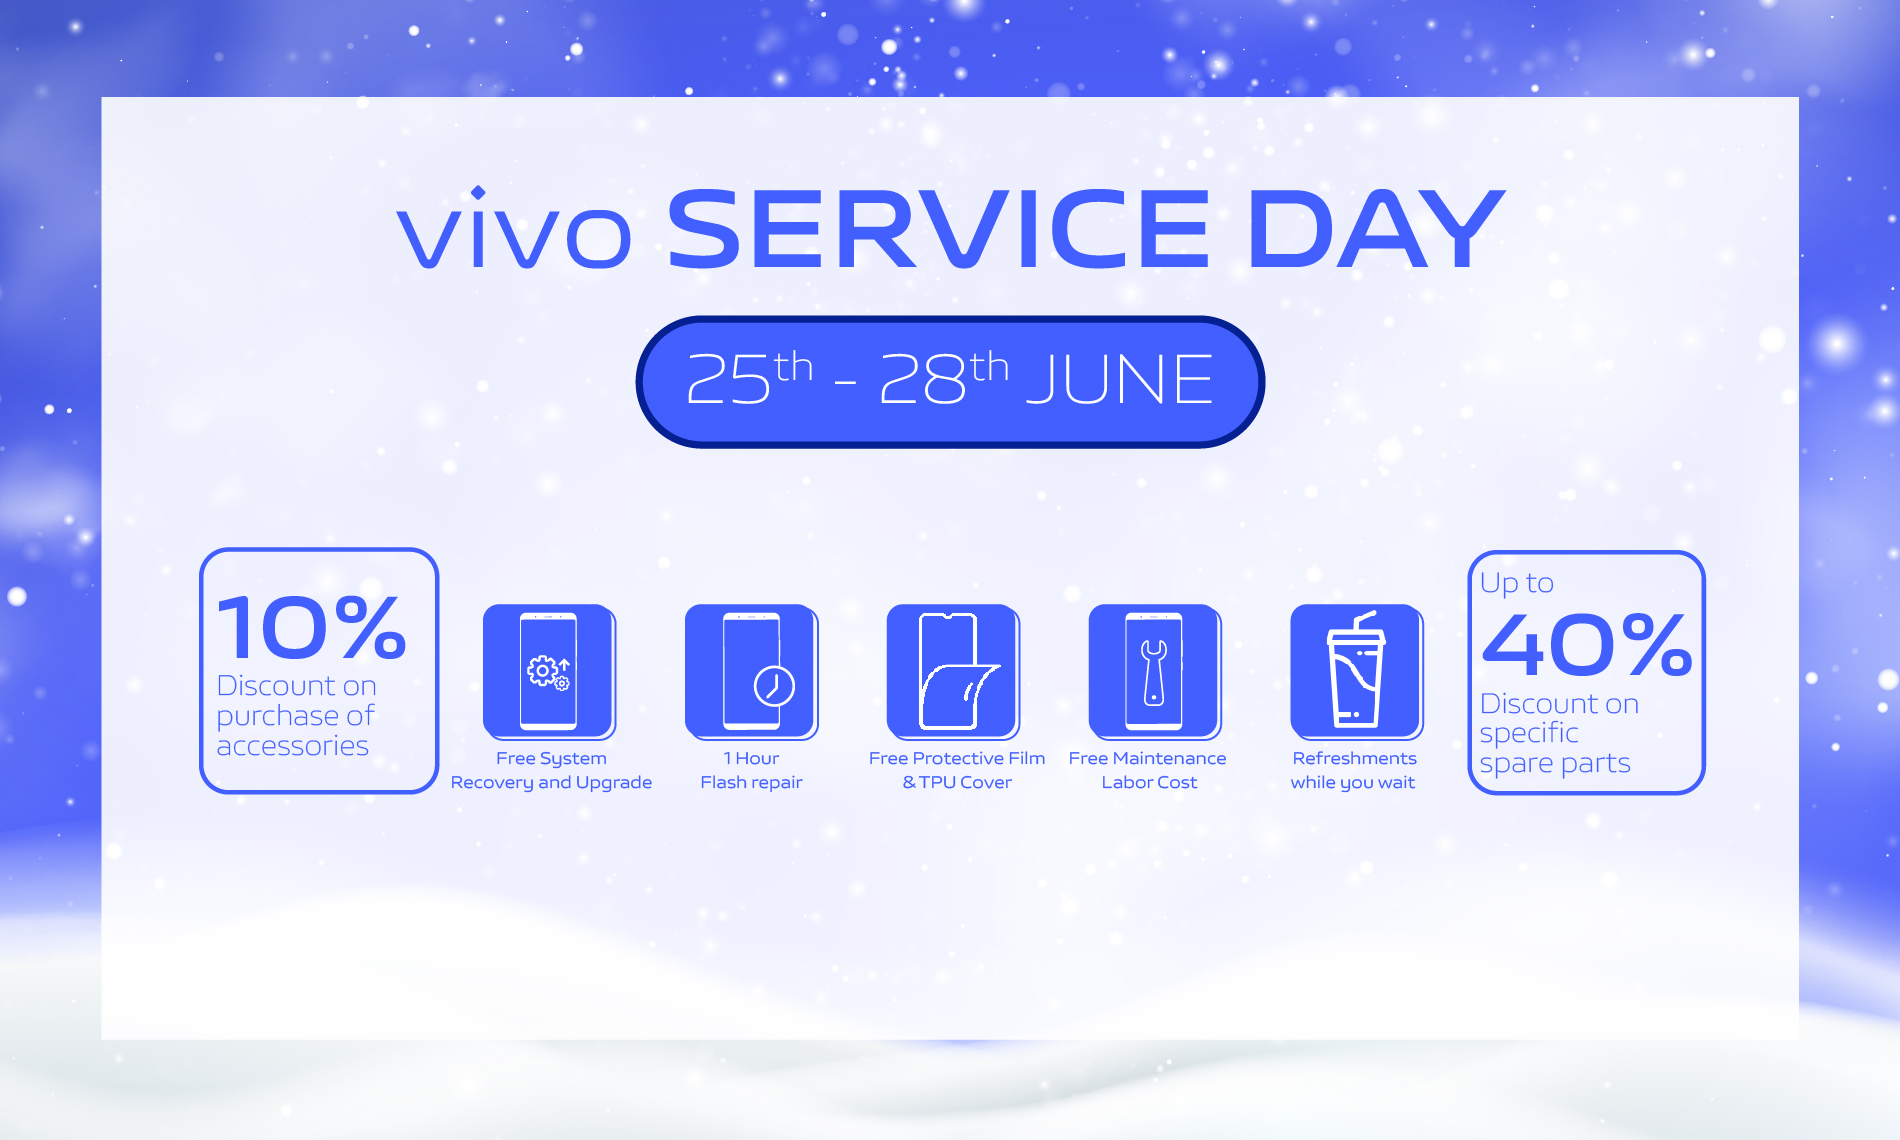 Enjoy vivo Service Day in June